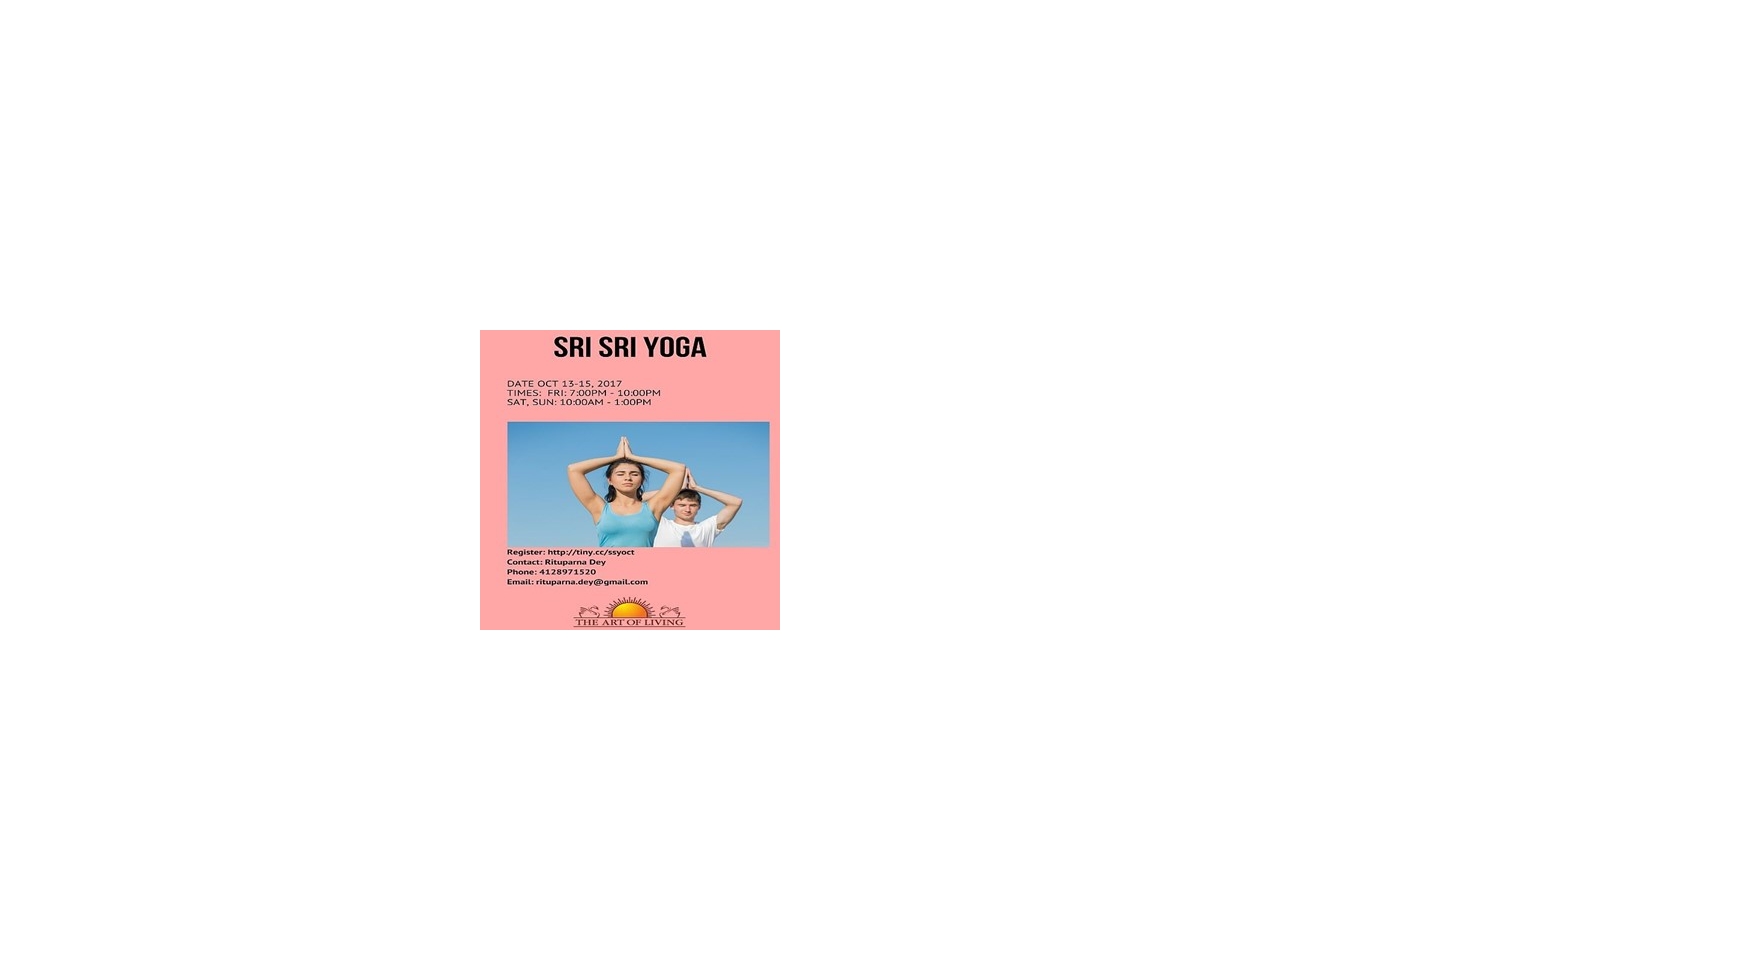 Art of Living Sri Sri Yoga Course Buy Tickets Online | Metuchen , Fri , 2017-10-13 | ThisisShow